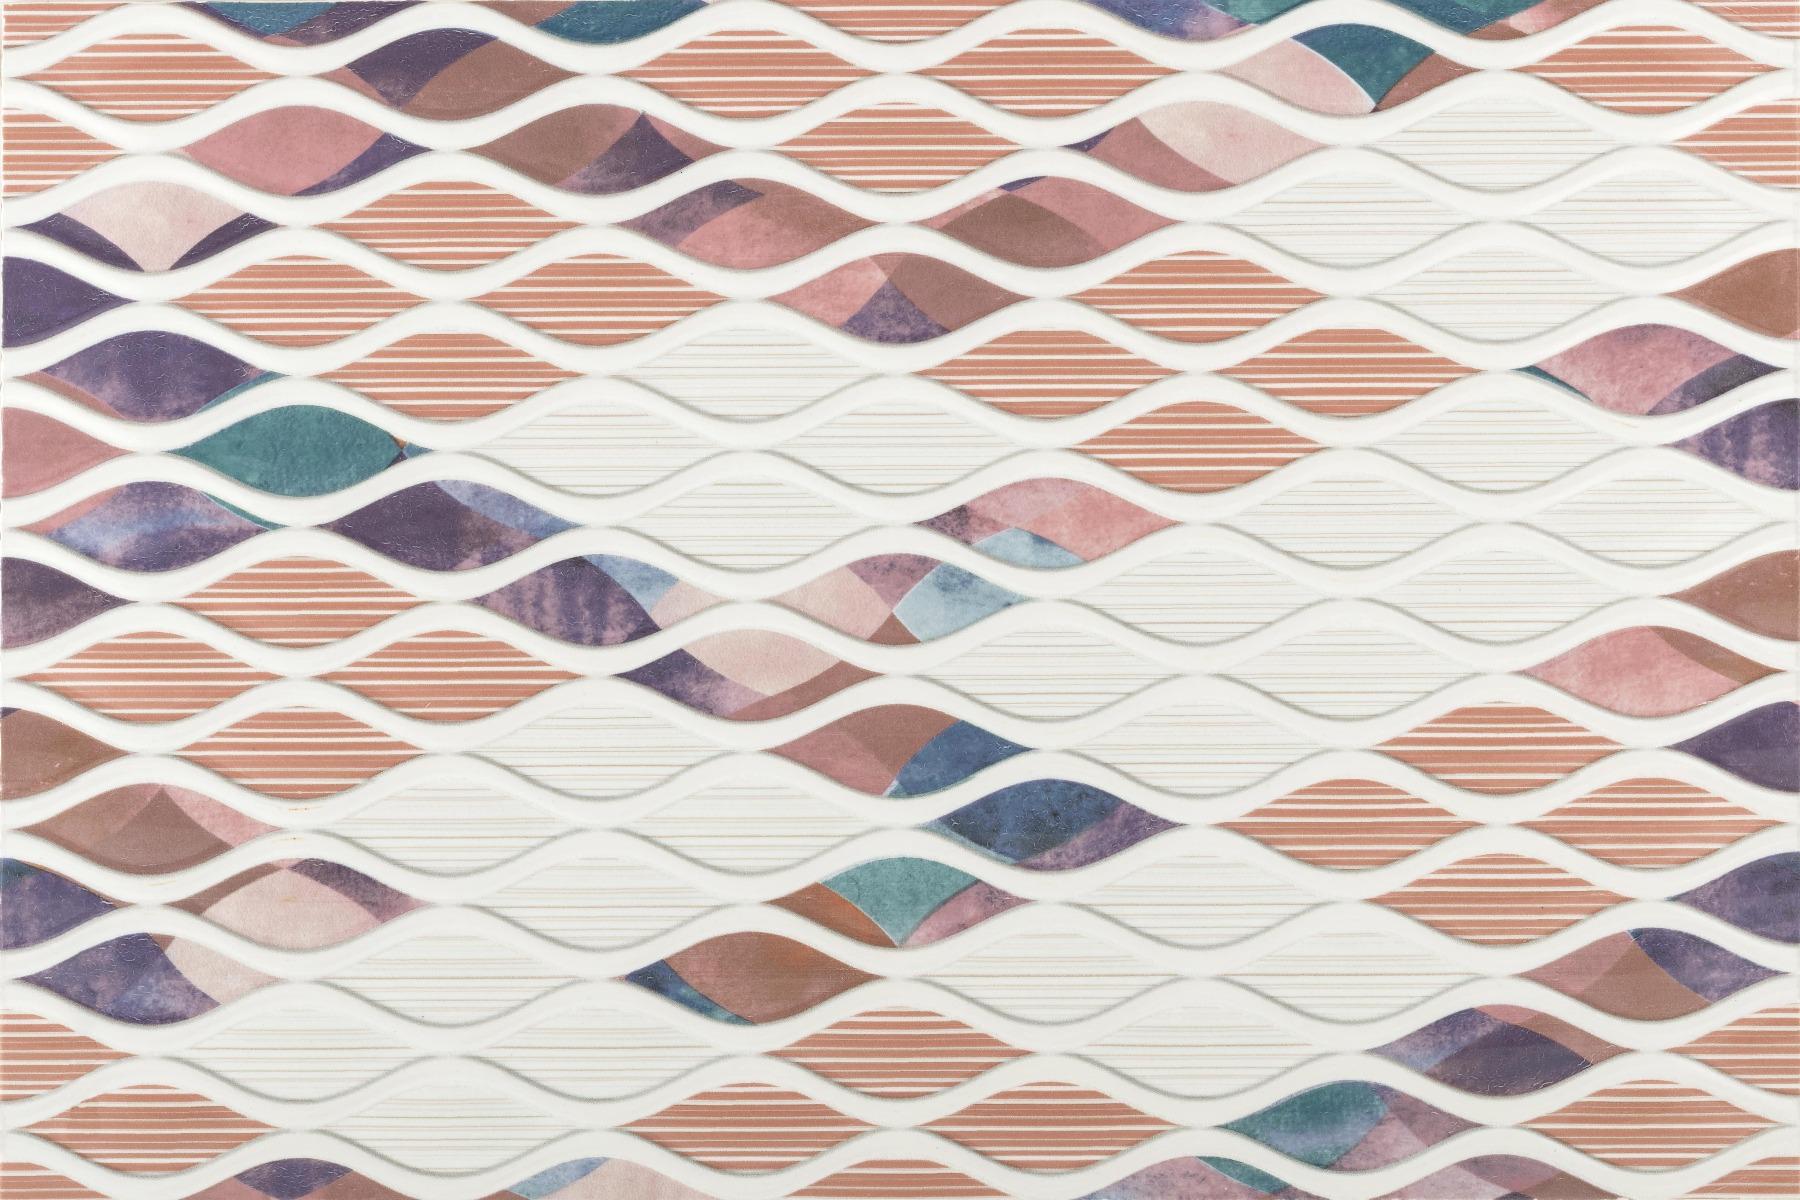 Pink Tiles for Bathroom Tiles, Kitchen Tiles, Accent Tiles